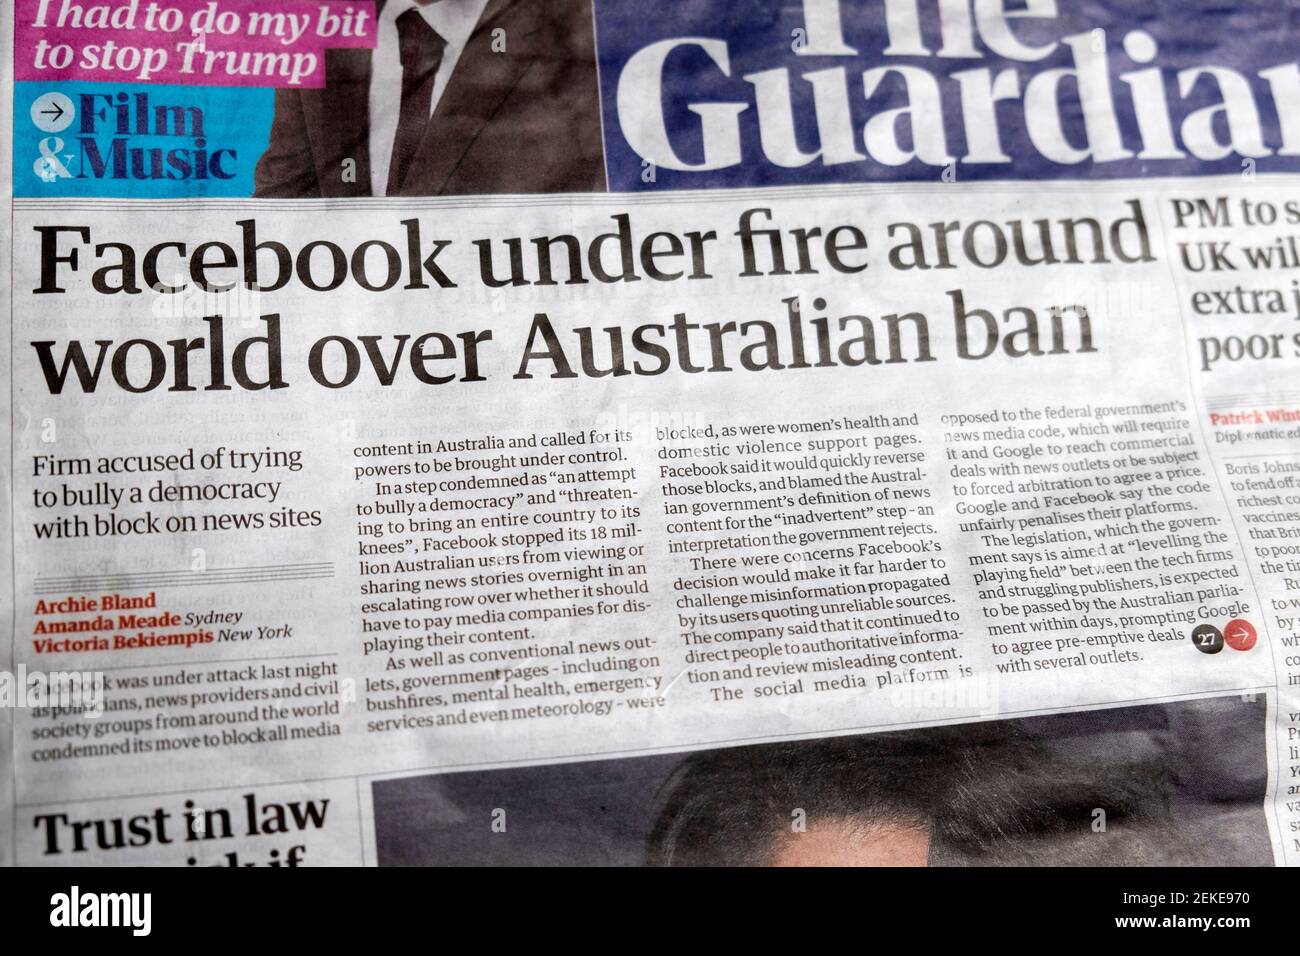 Facebook under fire around world over Australian ban" Guardian front page newspaper headline Australia article on 19 2021 Stock Photo -